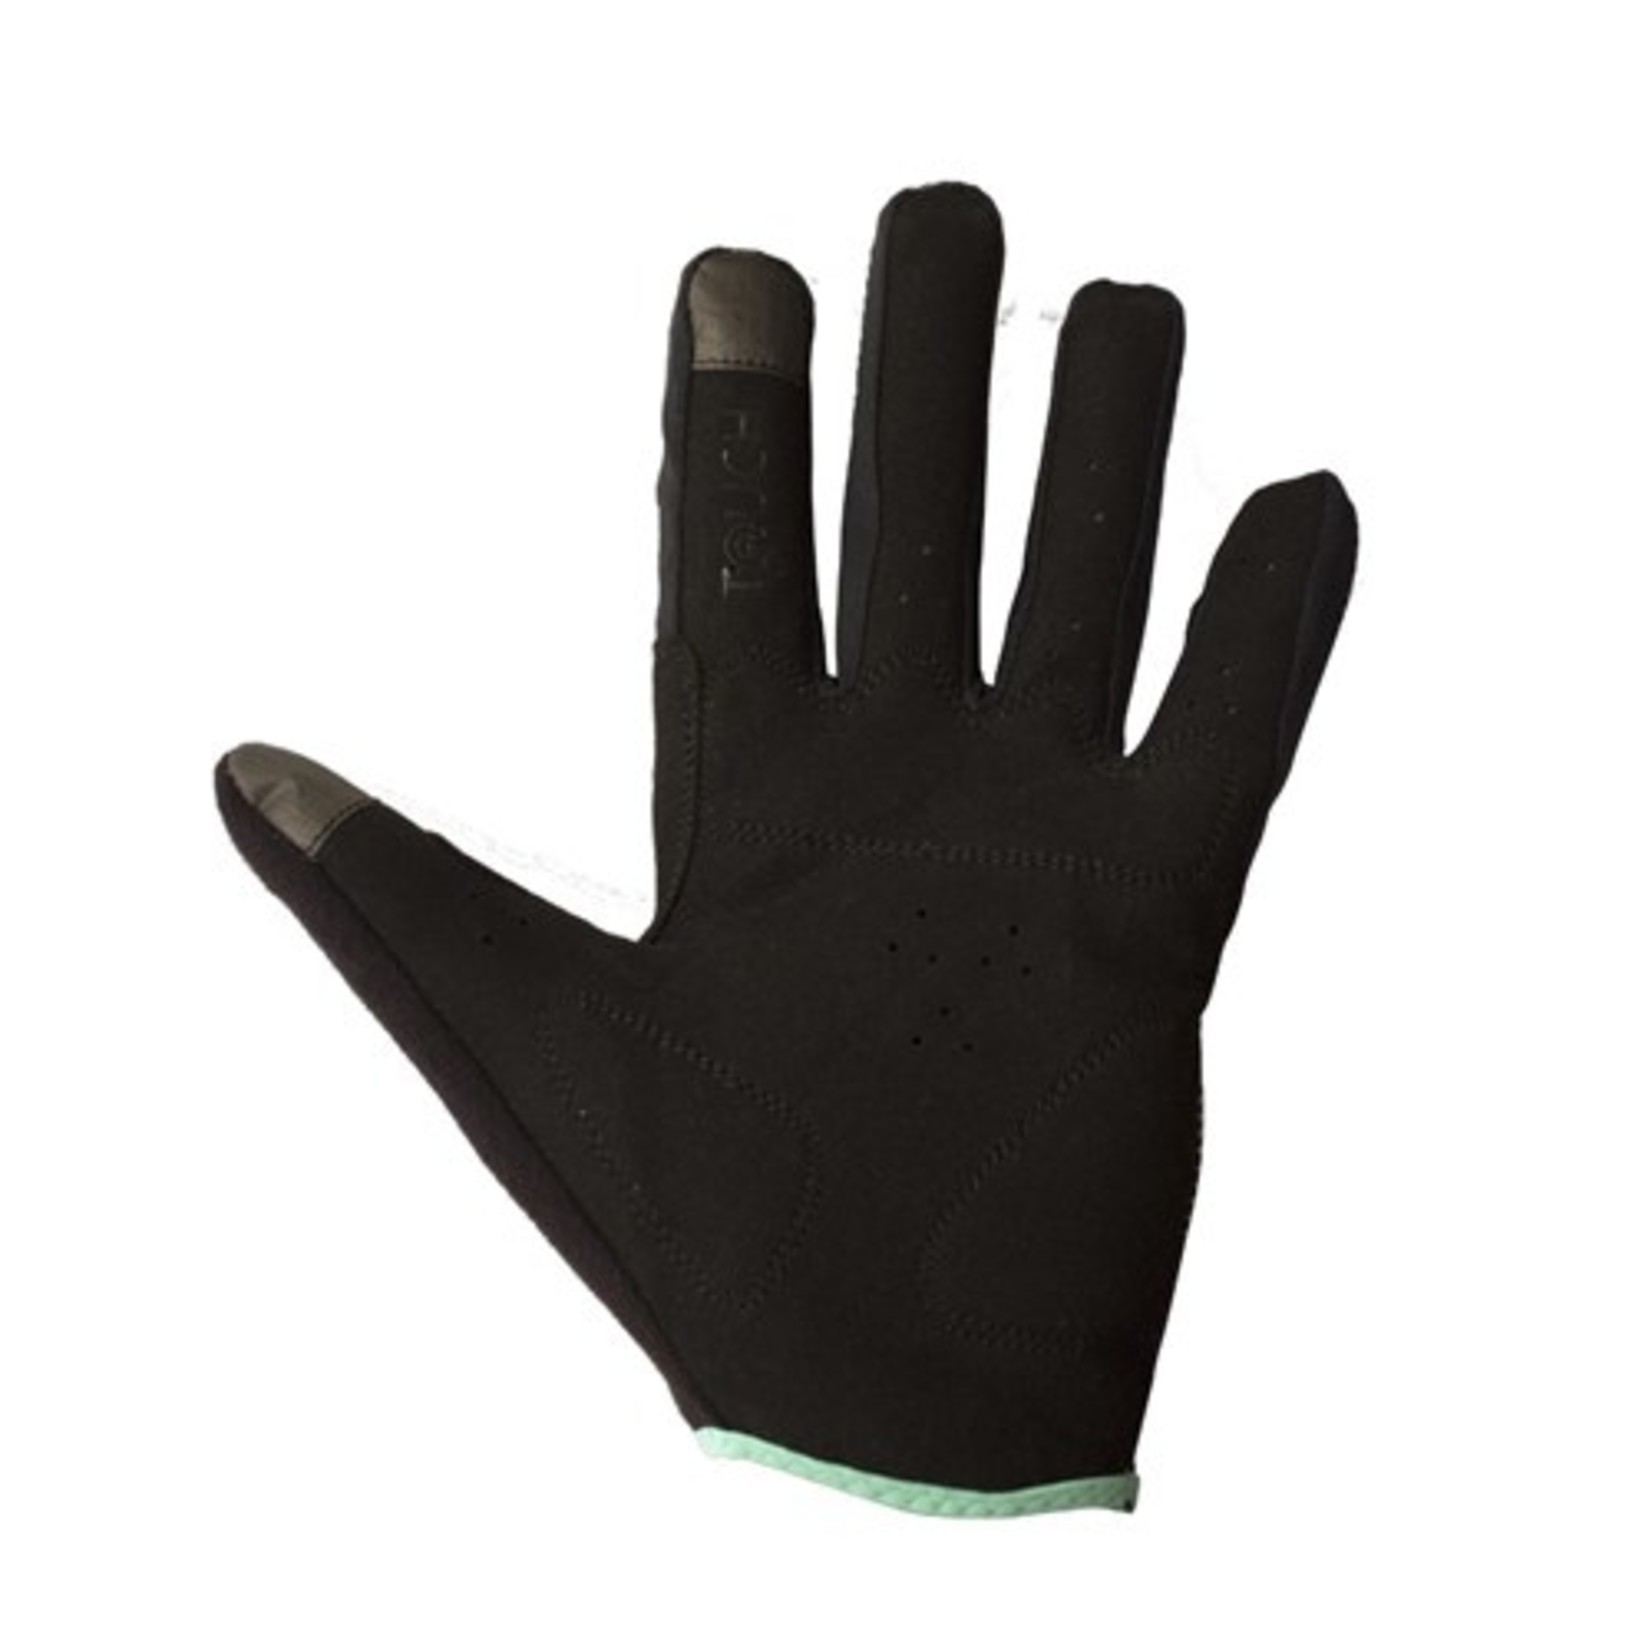 Azur Azur Bike/Cycling Lightweight Gloves - L60 Series - Breathable - Mint - XX-Small